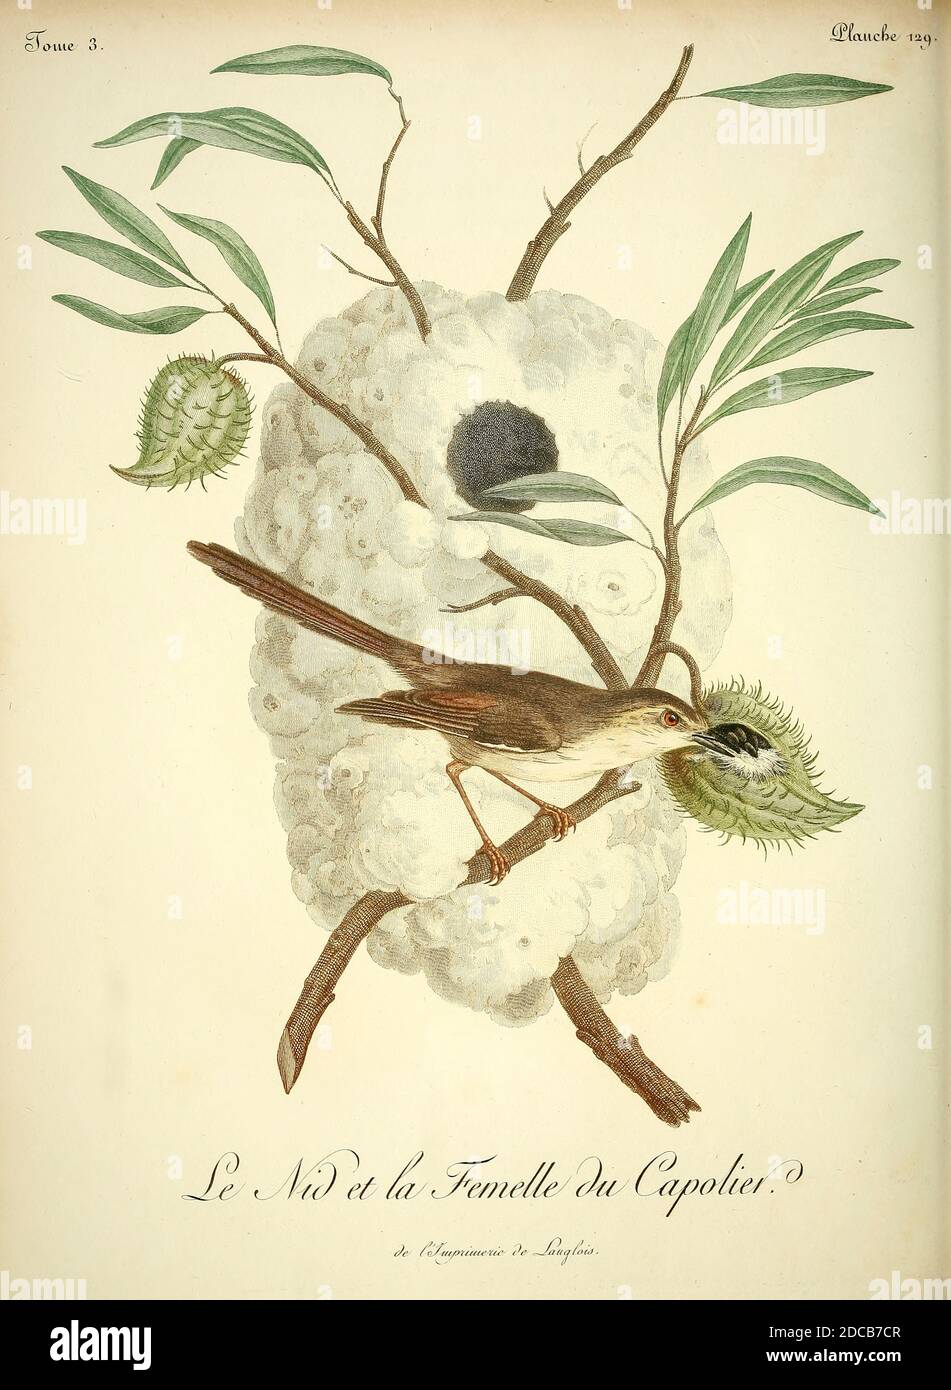 CAPOLIER (nicht identifiziert) und Nest. Aus dem Buch Histoire naturelle des oiseaux d'Afrique [Naturgeschichte der Vögel Afrikas] Band 3, von Le Vaillant, François, 1753-1824; Publizieren in Paris von Chez J.J. Fuchs, Bibliothekar 1799 - 1802 Stockfoto